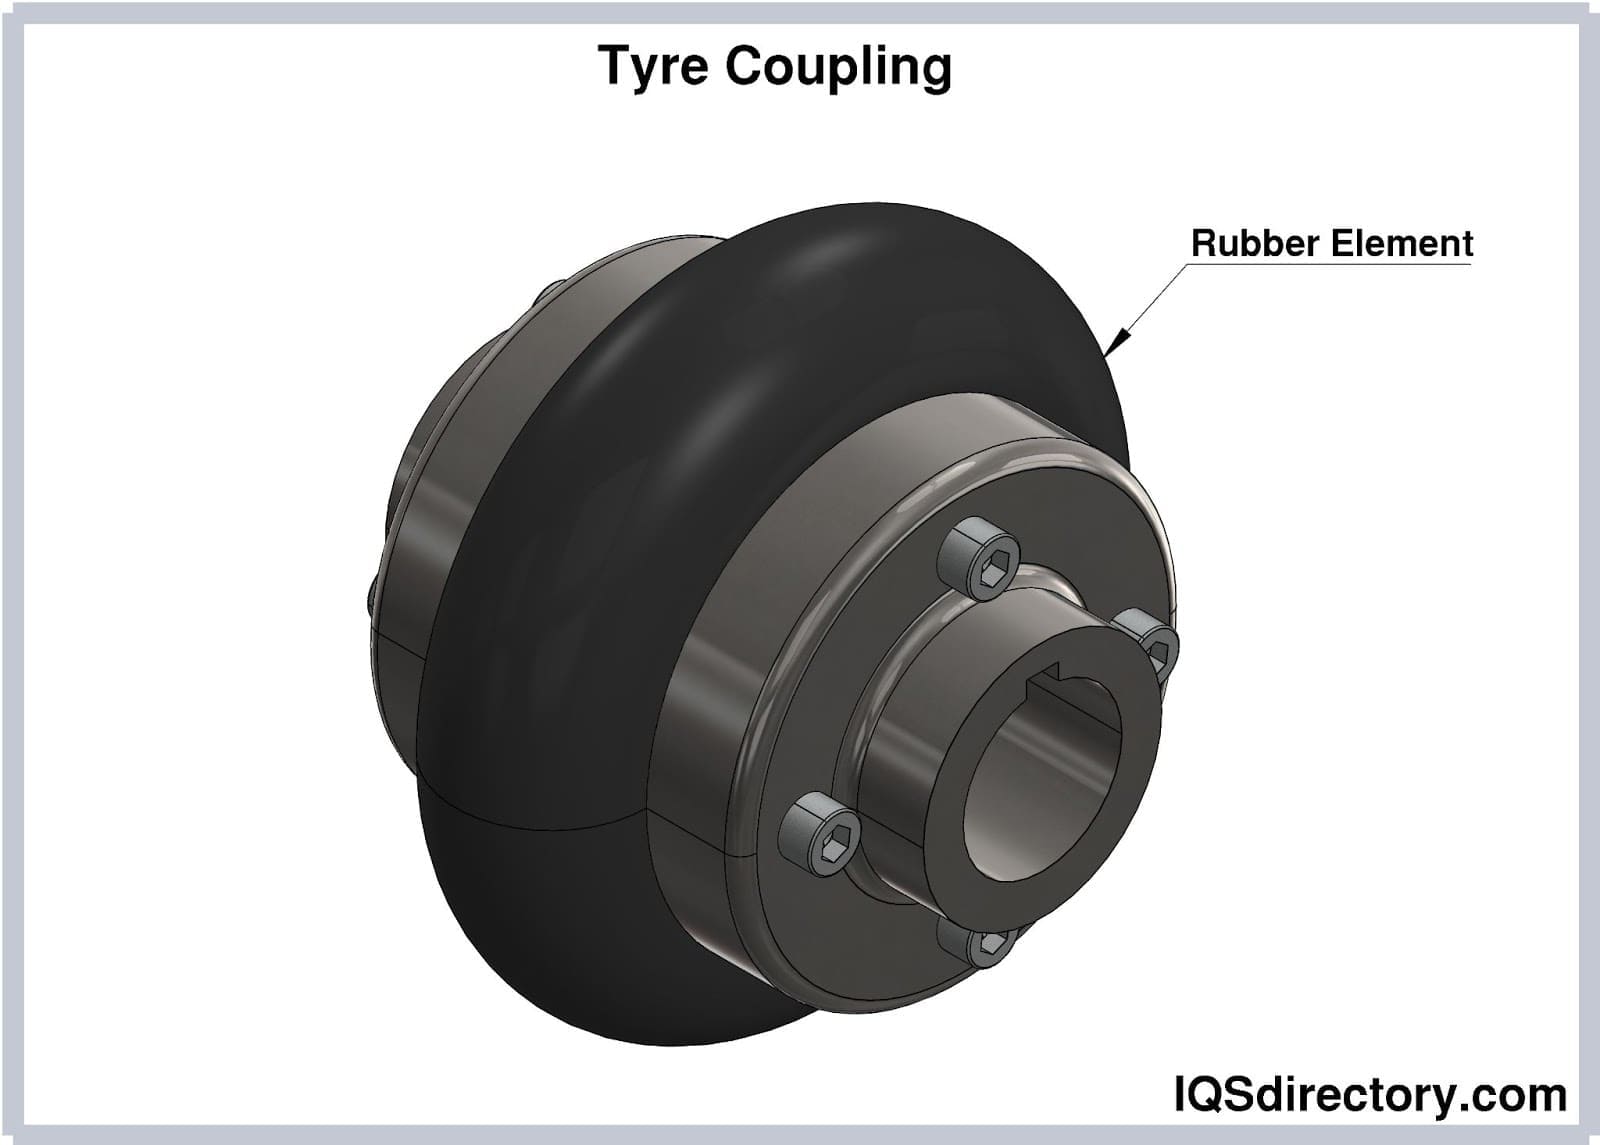 Tyre Coupling